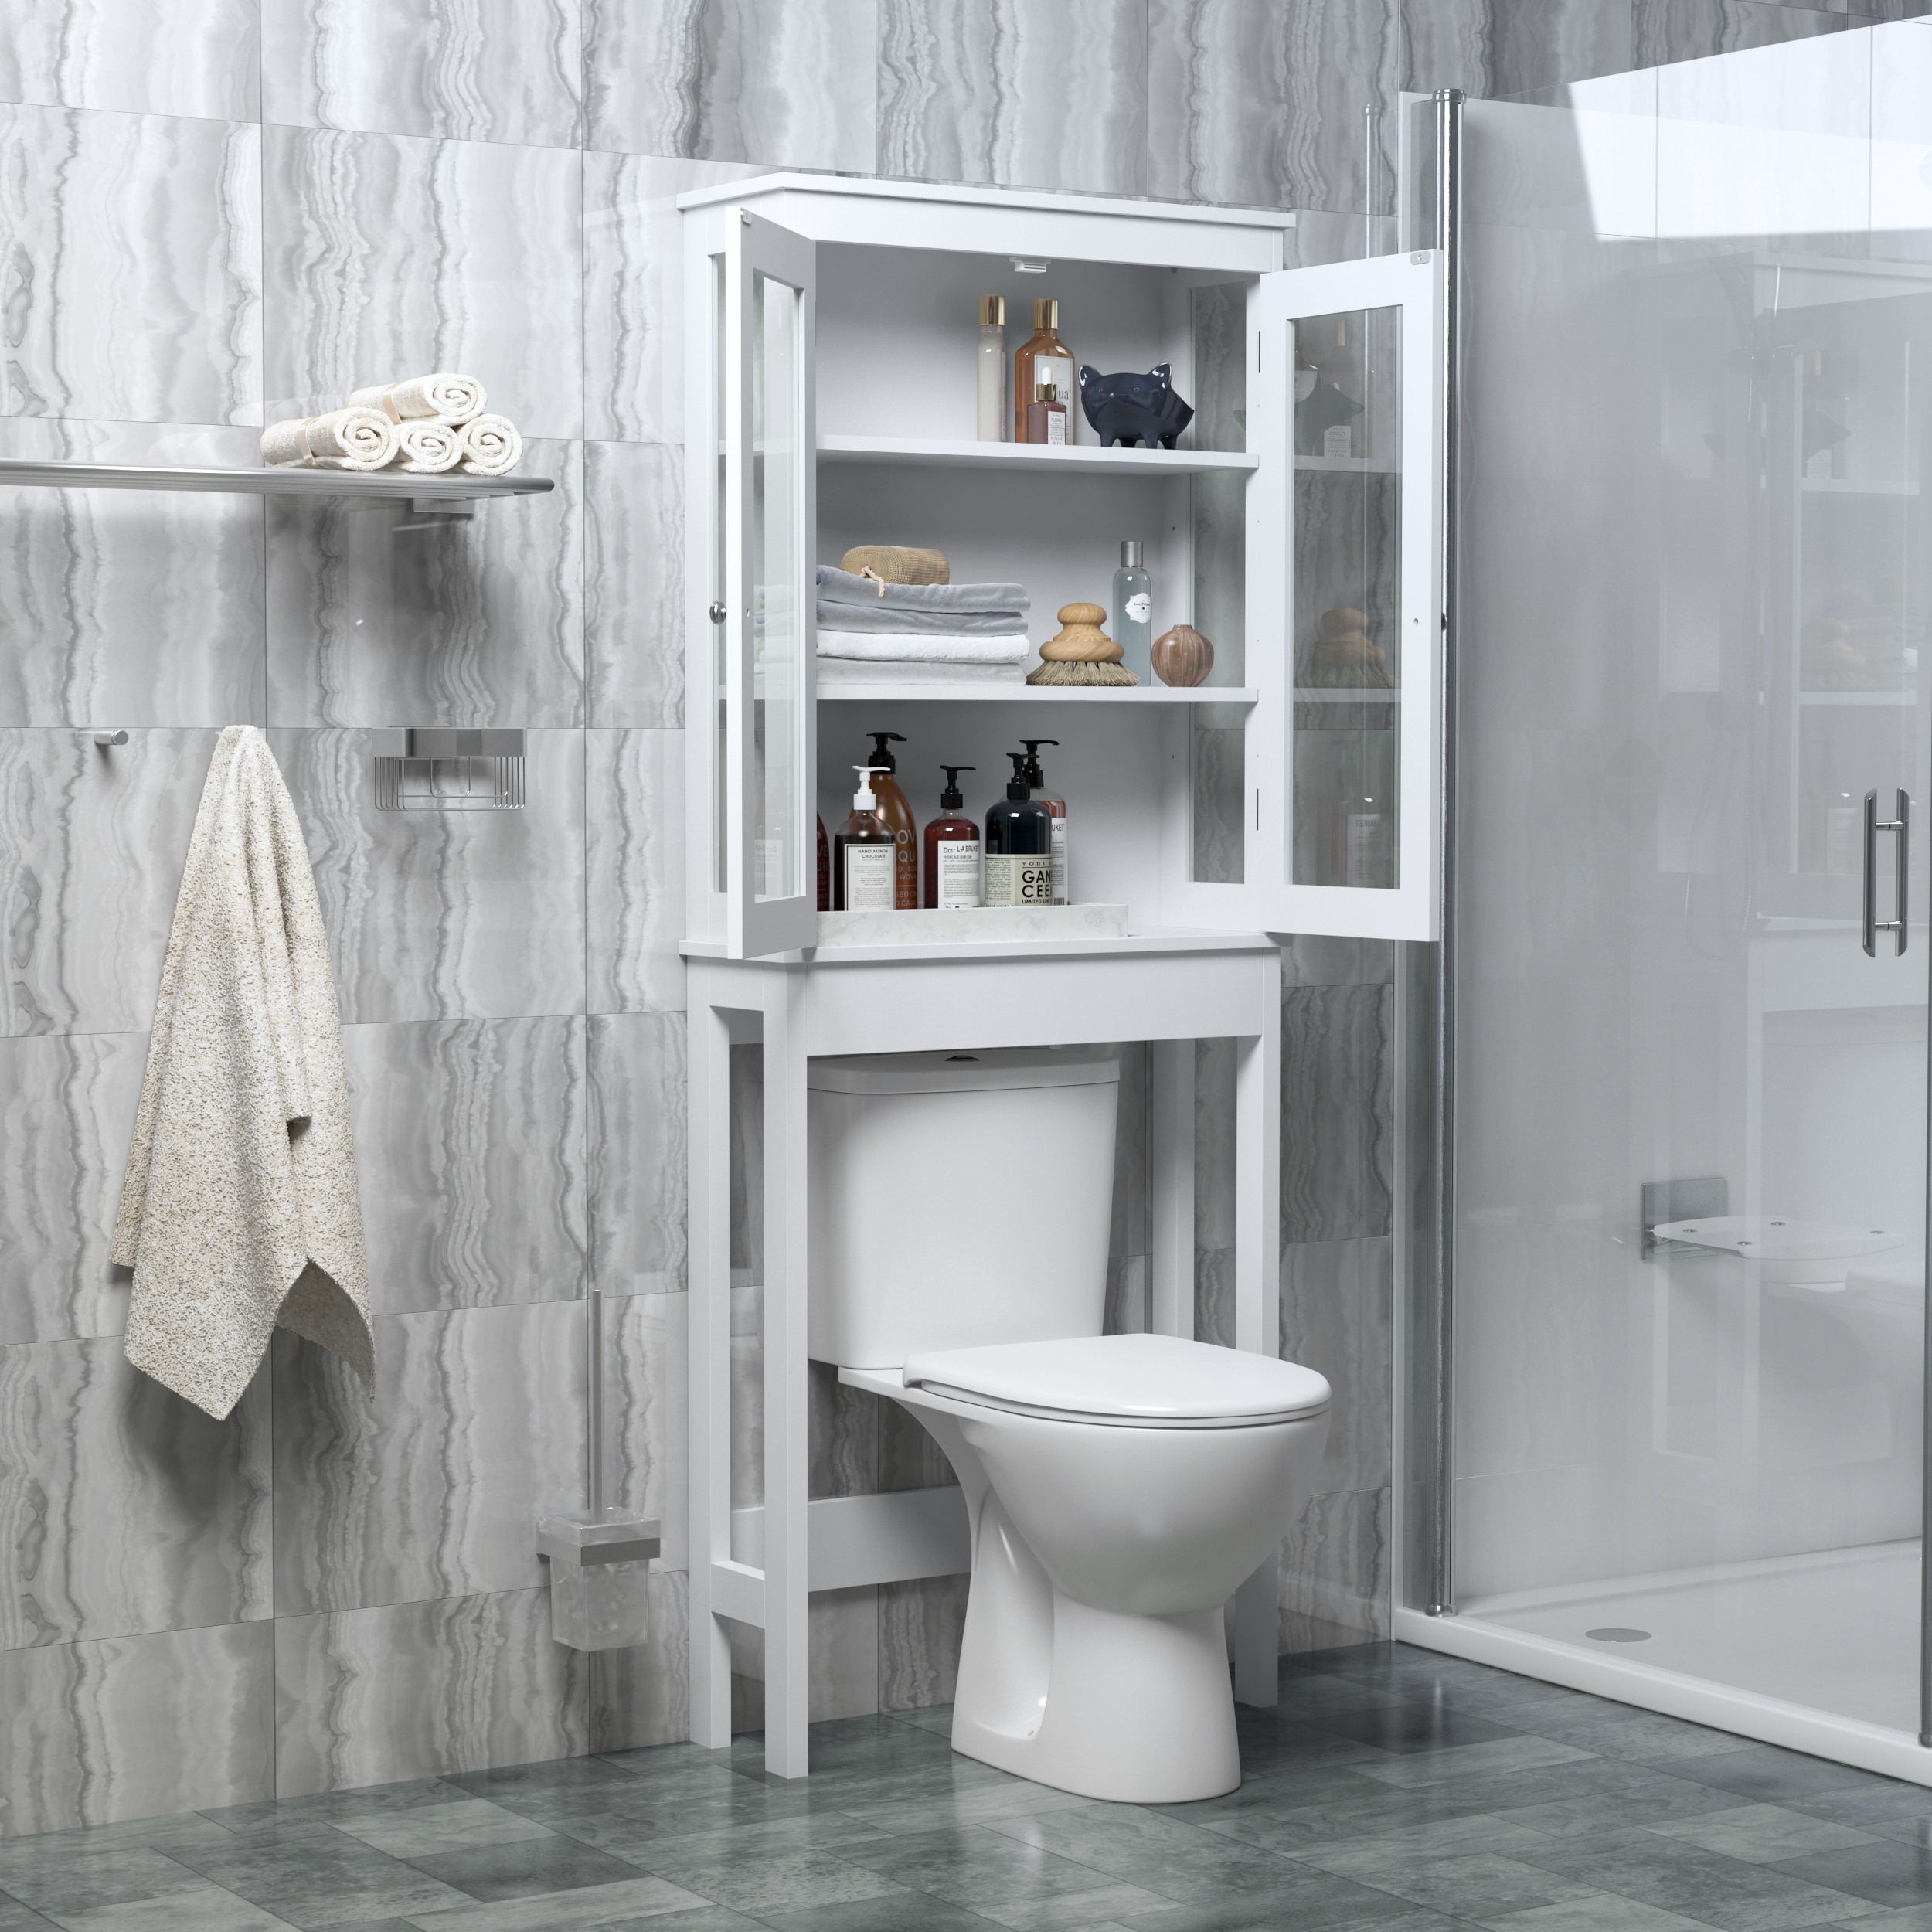 6622165cm-Over-the-Toilet-Storage-Cabinet-Bathroom-Shelves-Organizer-Space-Saver-Bath-Rack-1614005-9